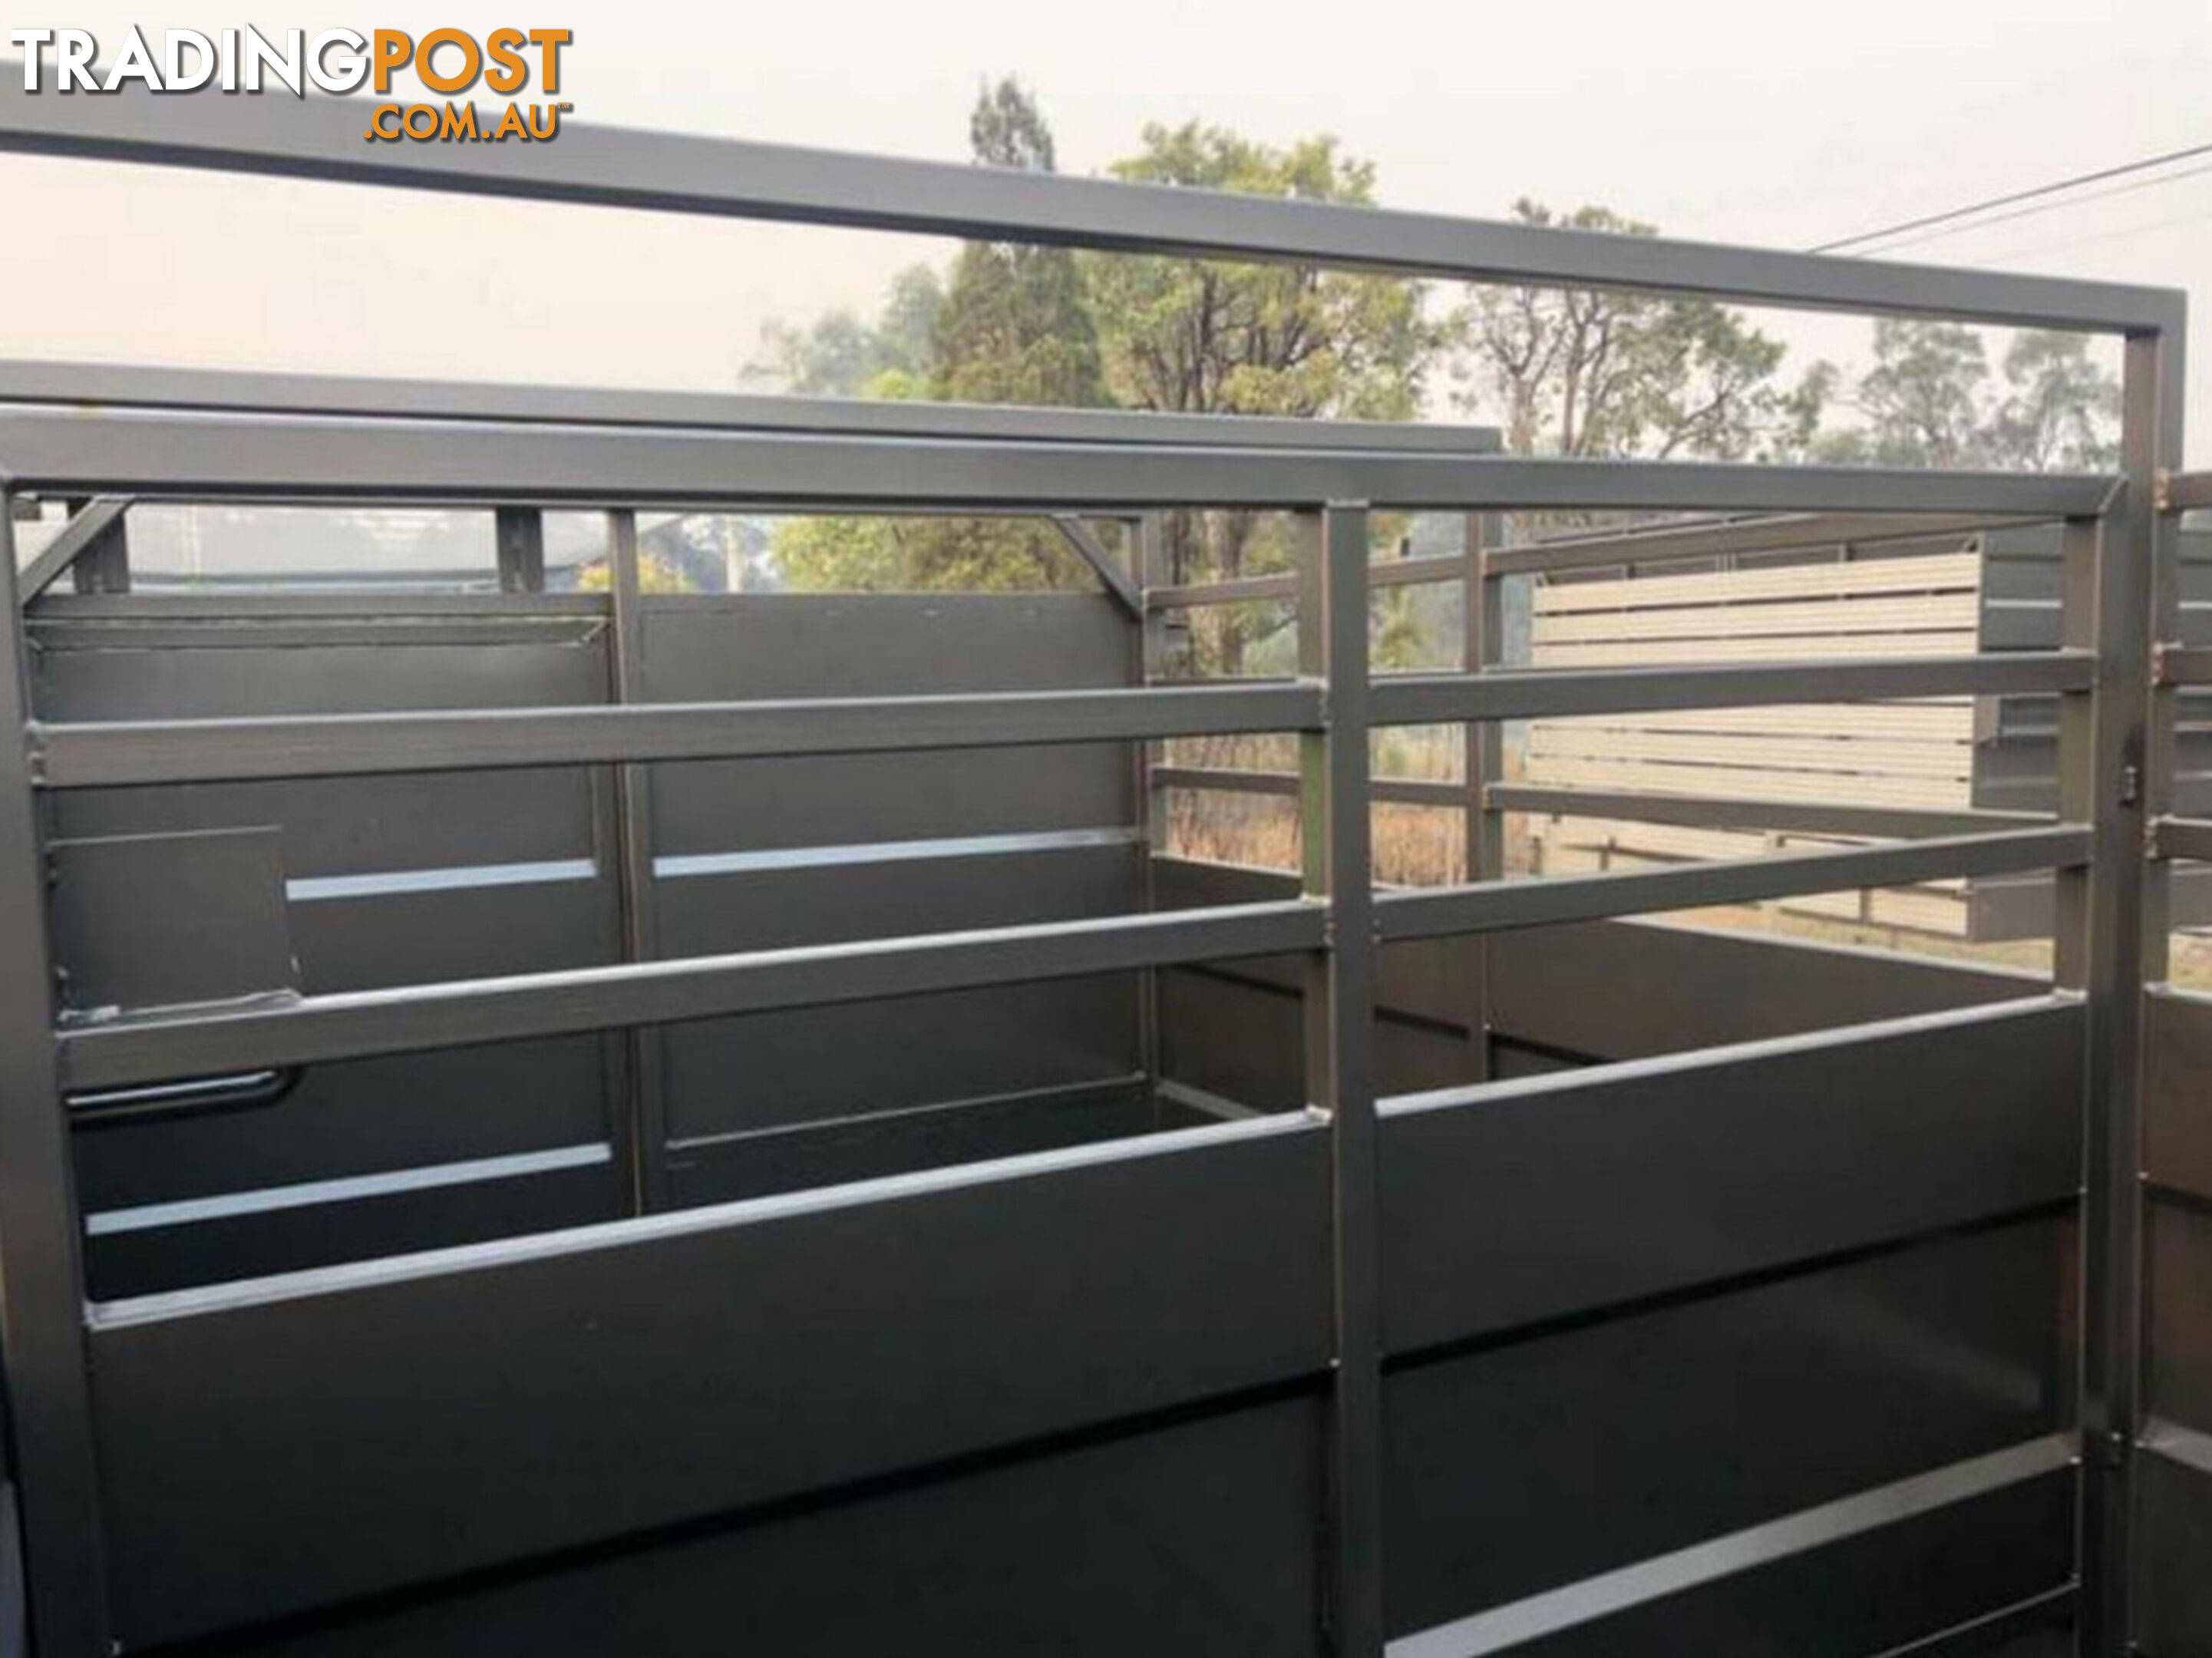 3.5 tone Multi use Plant Trailer / Cattle livestock Crate Trailer 